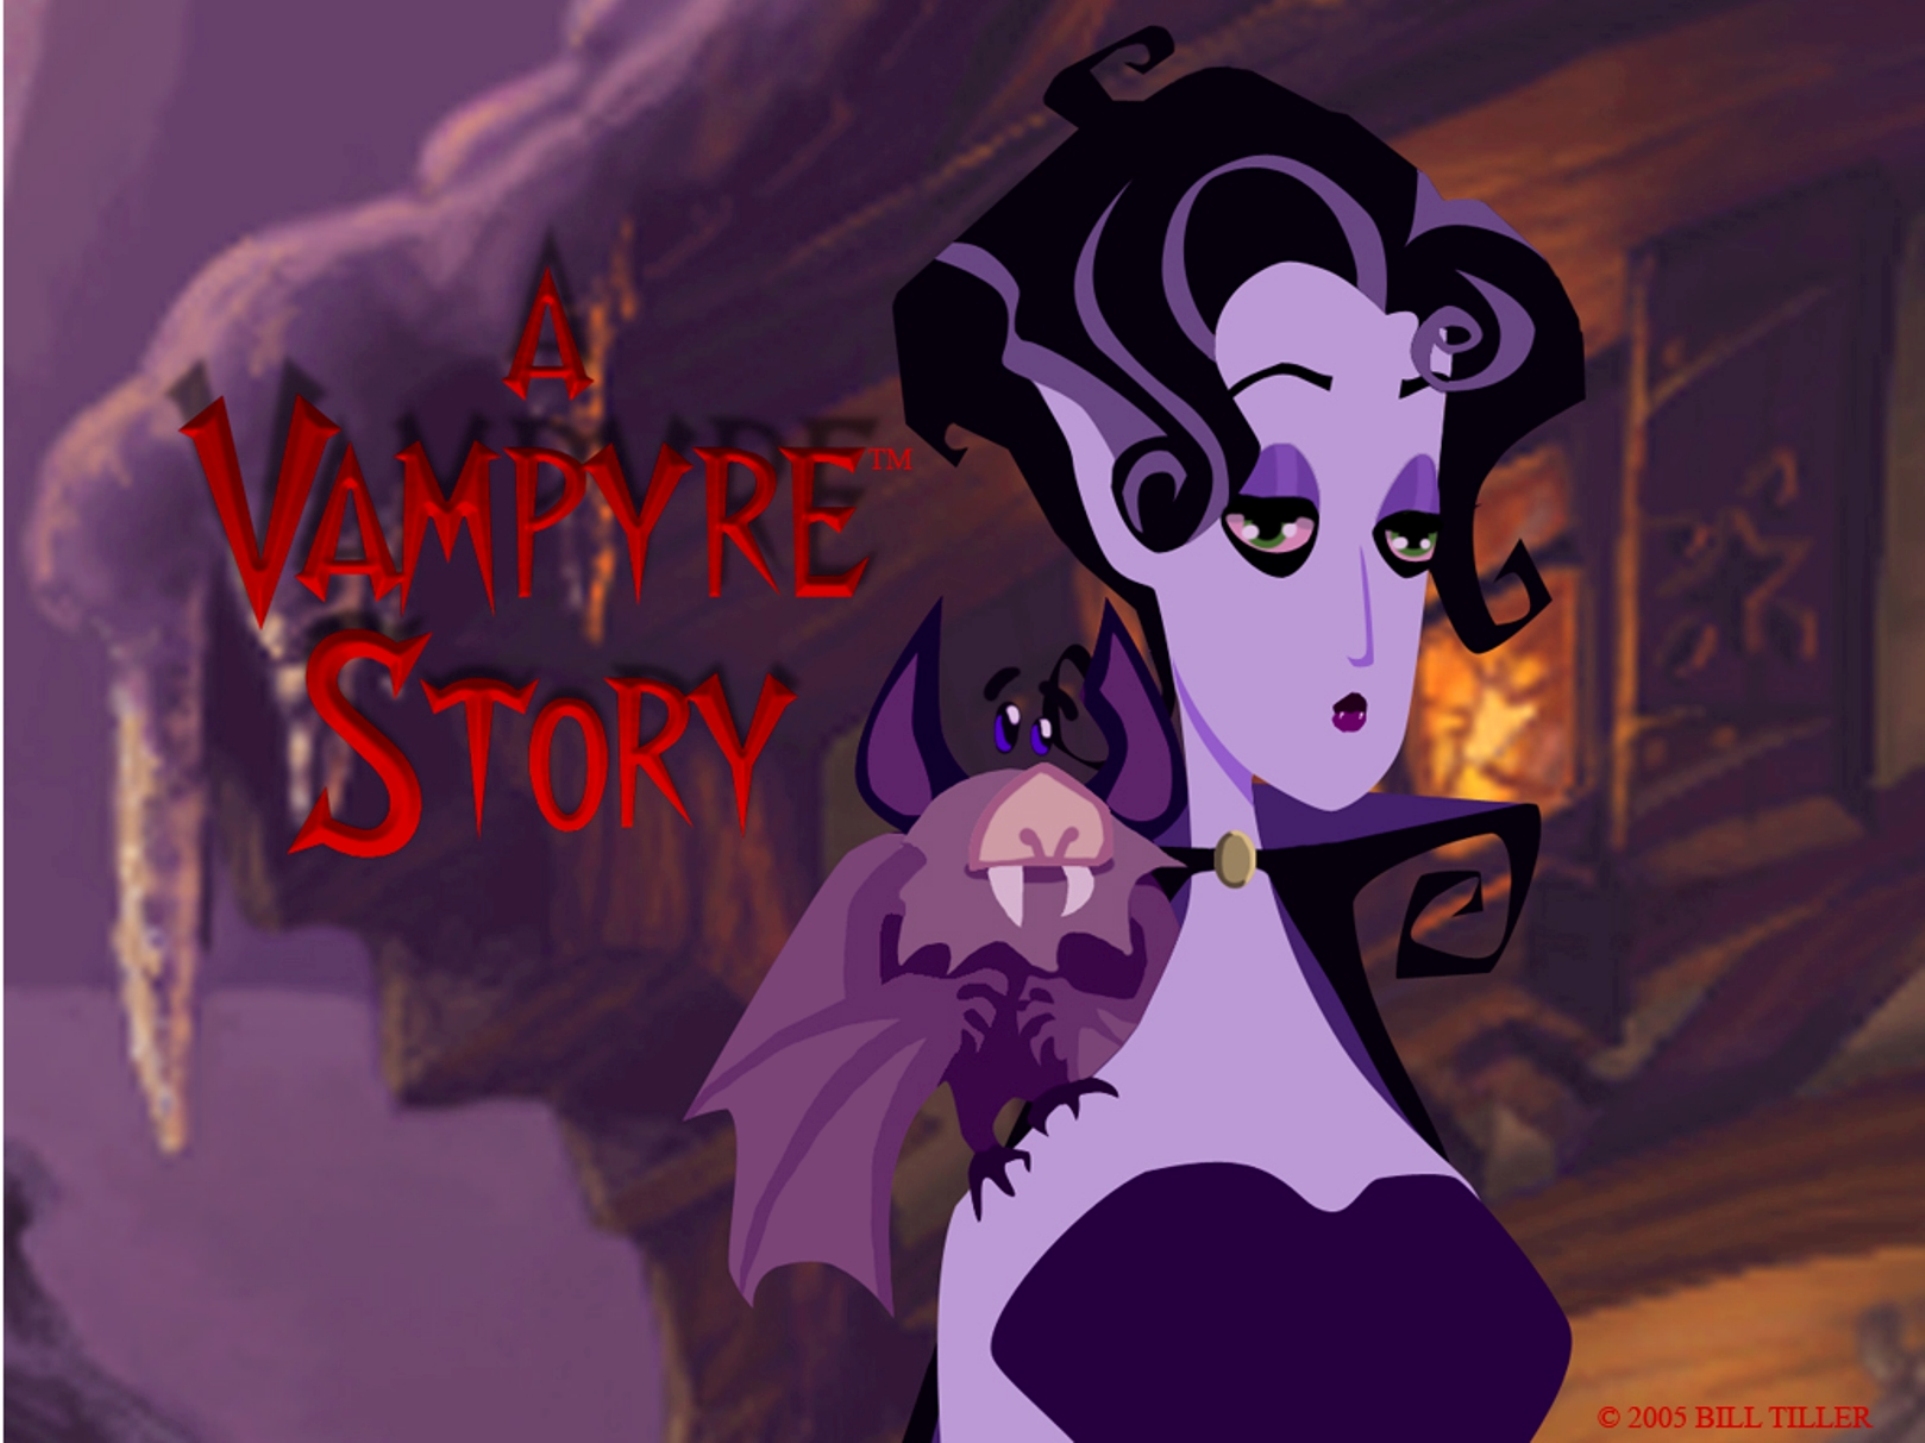 Vampire story game. Vampyre story игра. A Vampyre story Мона. Мона де Лафитт.